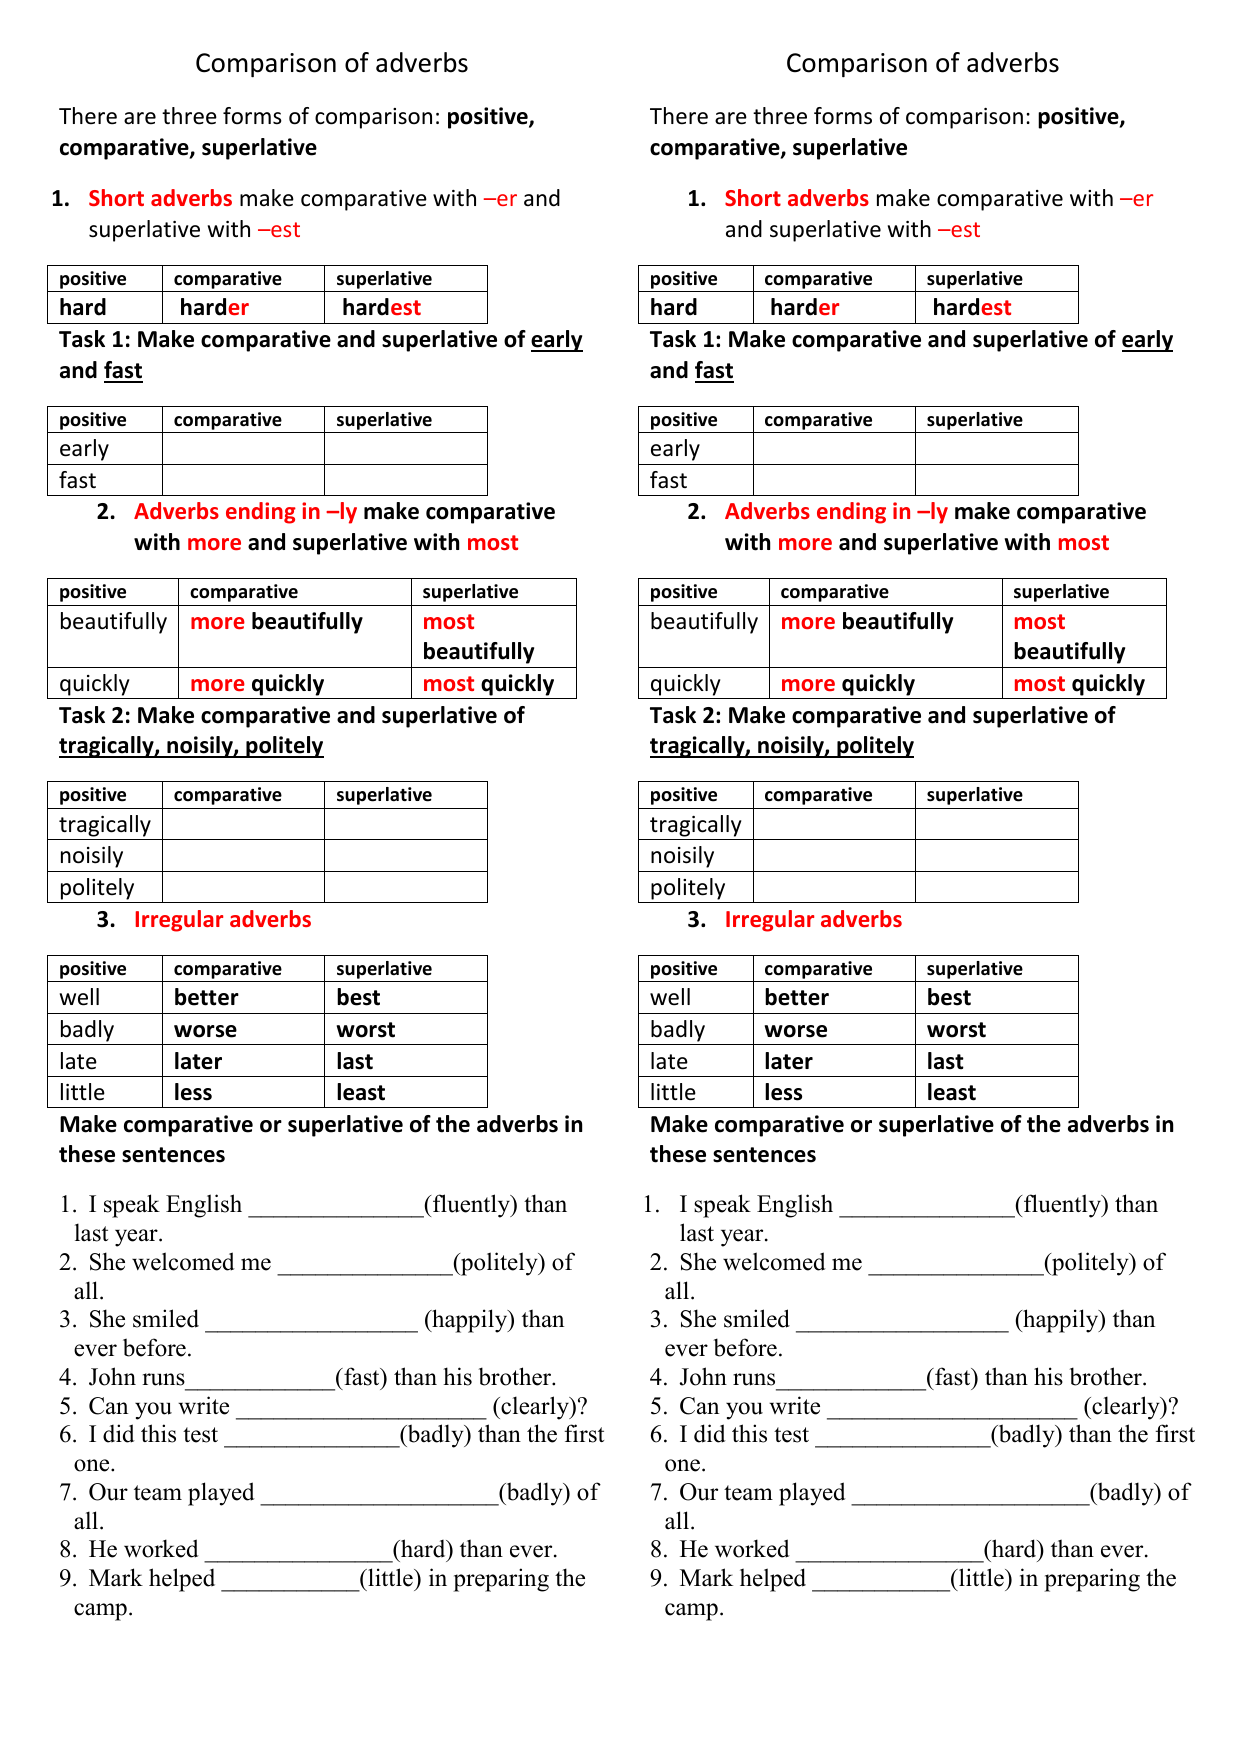 16-best-images-of-adverbs-worksheets-grade-8-adverb-worksheets-middle-school-homonyms